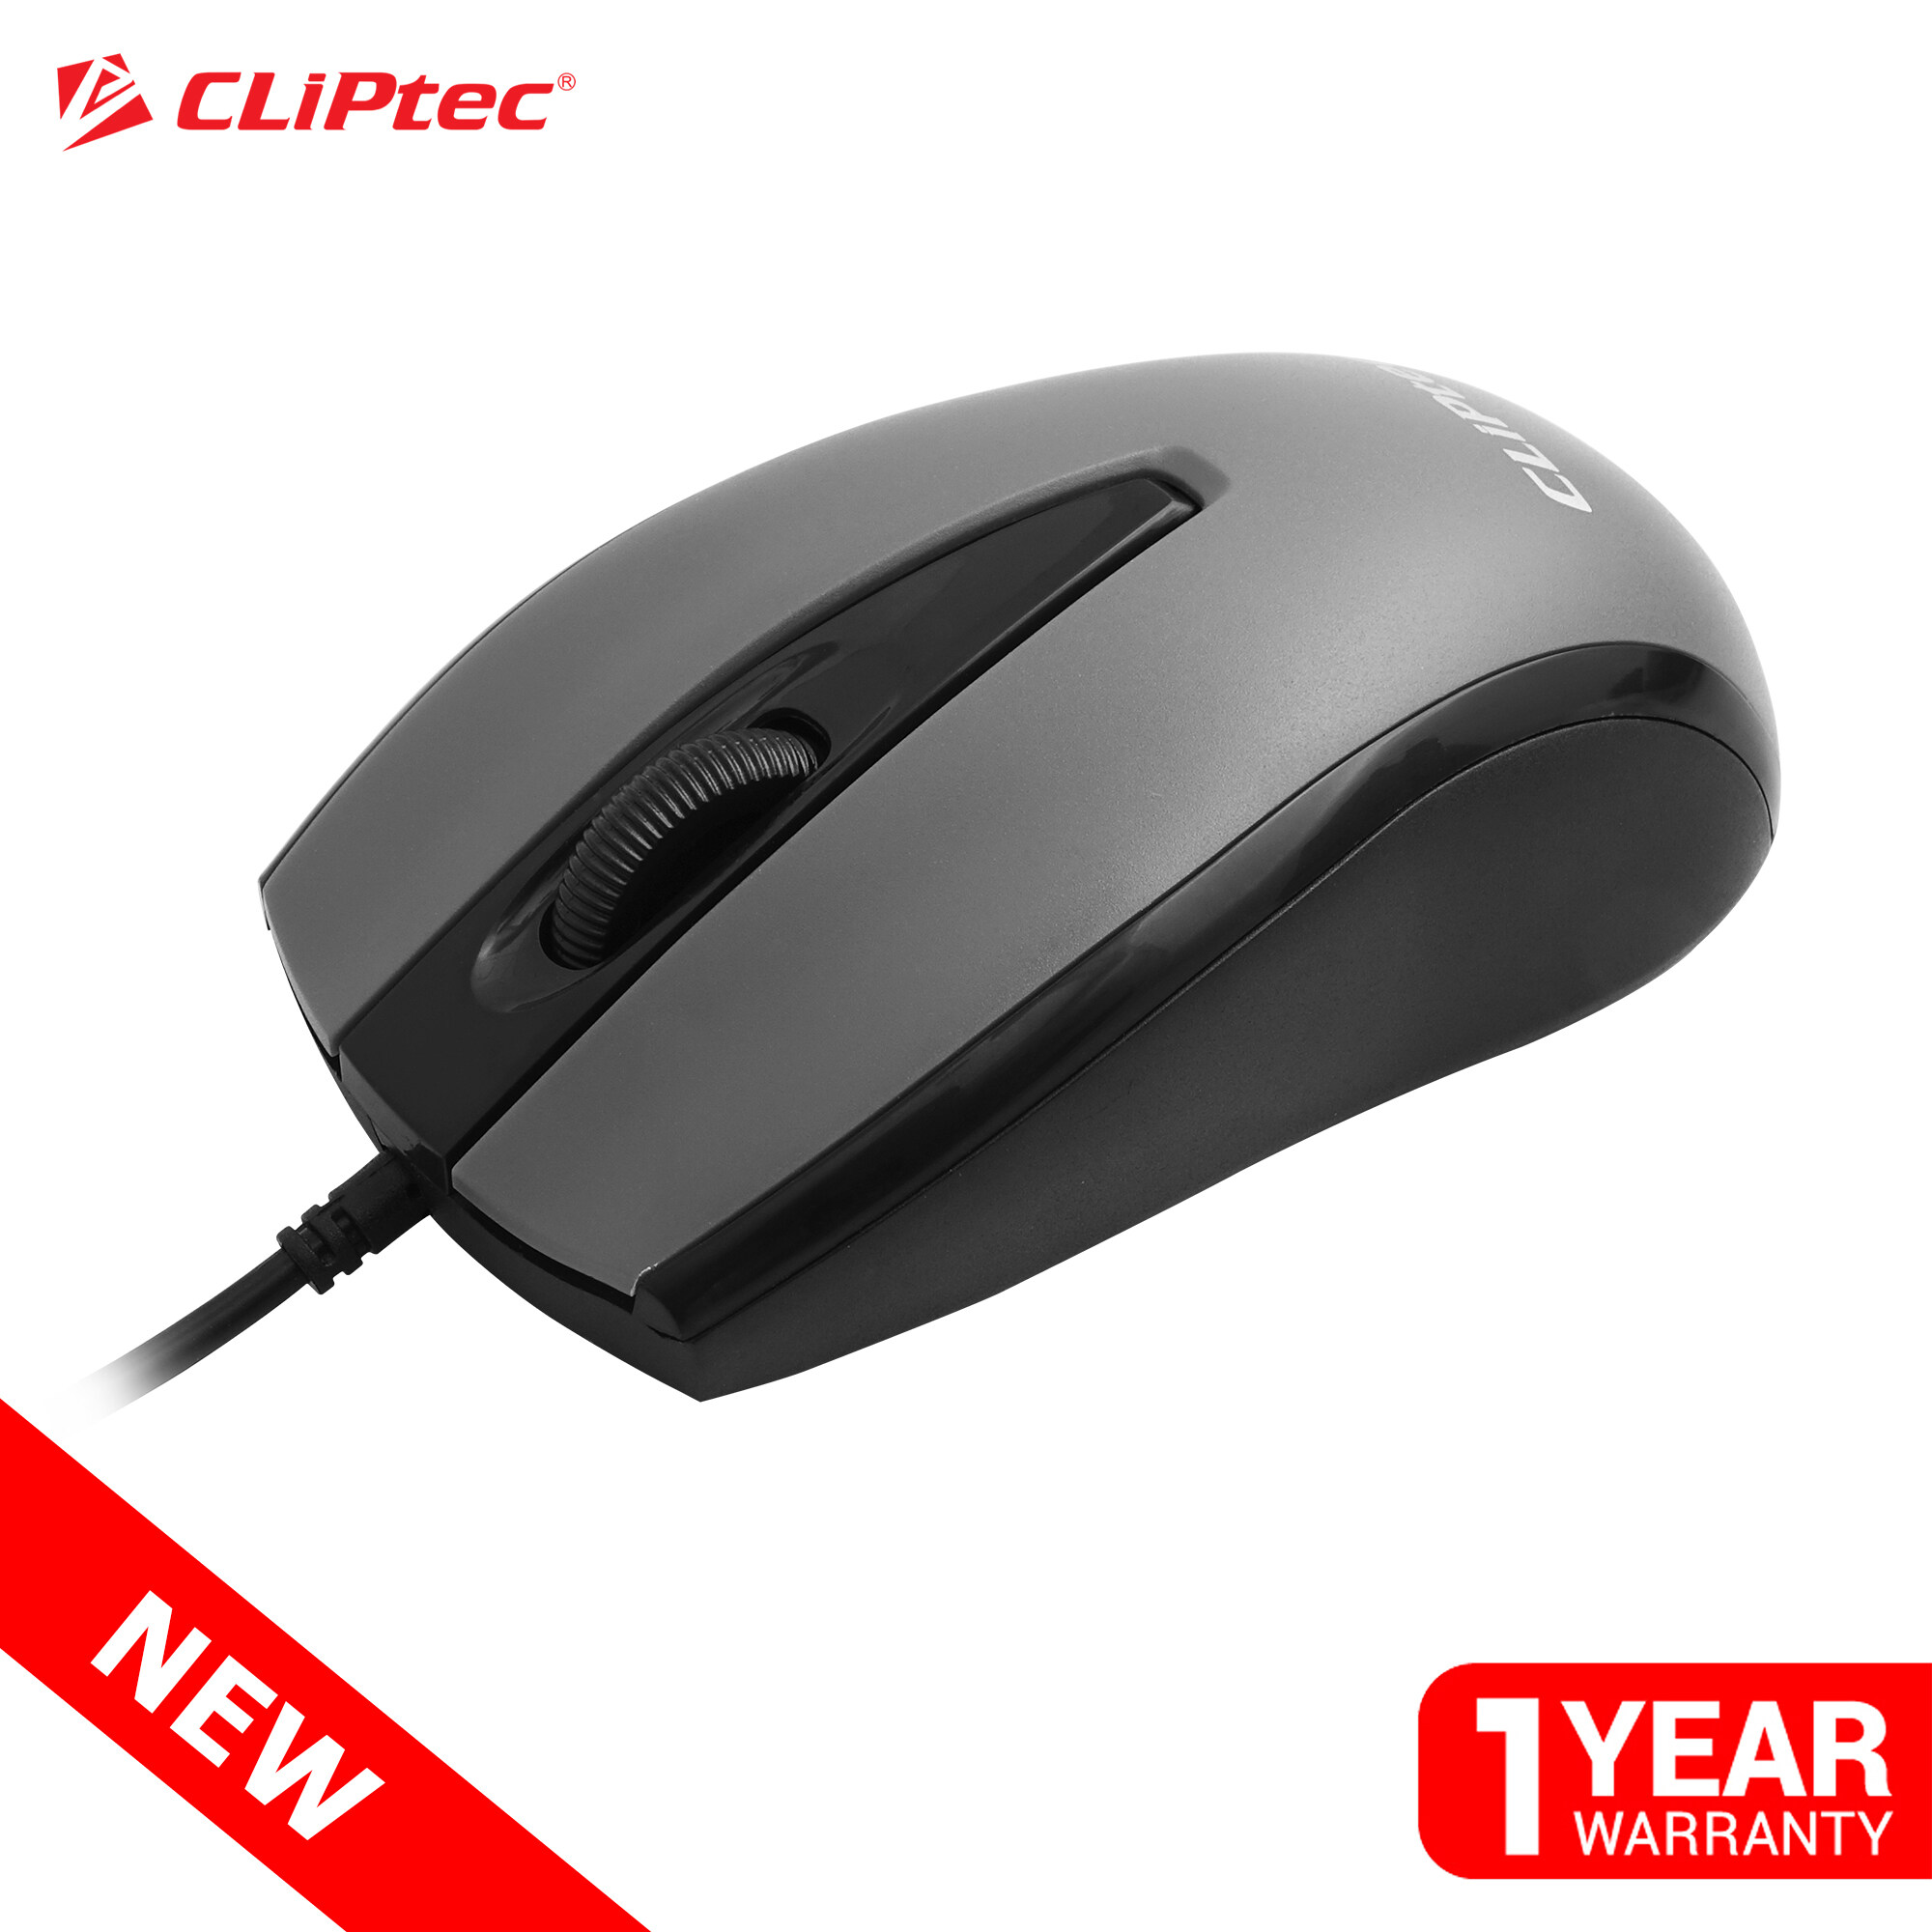 CLiPtec-RZS951-Xilent Scroll Optical Mouse เมาส์สาย ออปติคอล เสียงคลิกเบาเงียบ หัว USB 2.0 ความละเอียด 1200dpi รูปทรงใช้งานได้ทั้งมือซ้ายและมือขวา สายยาว 140 cm